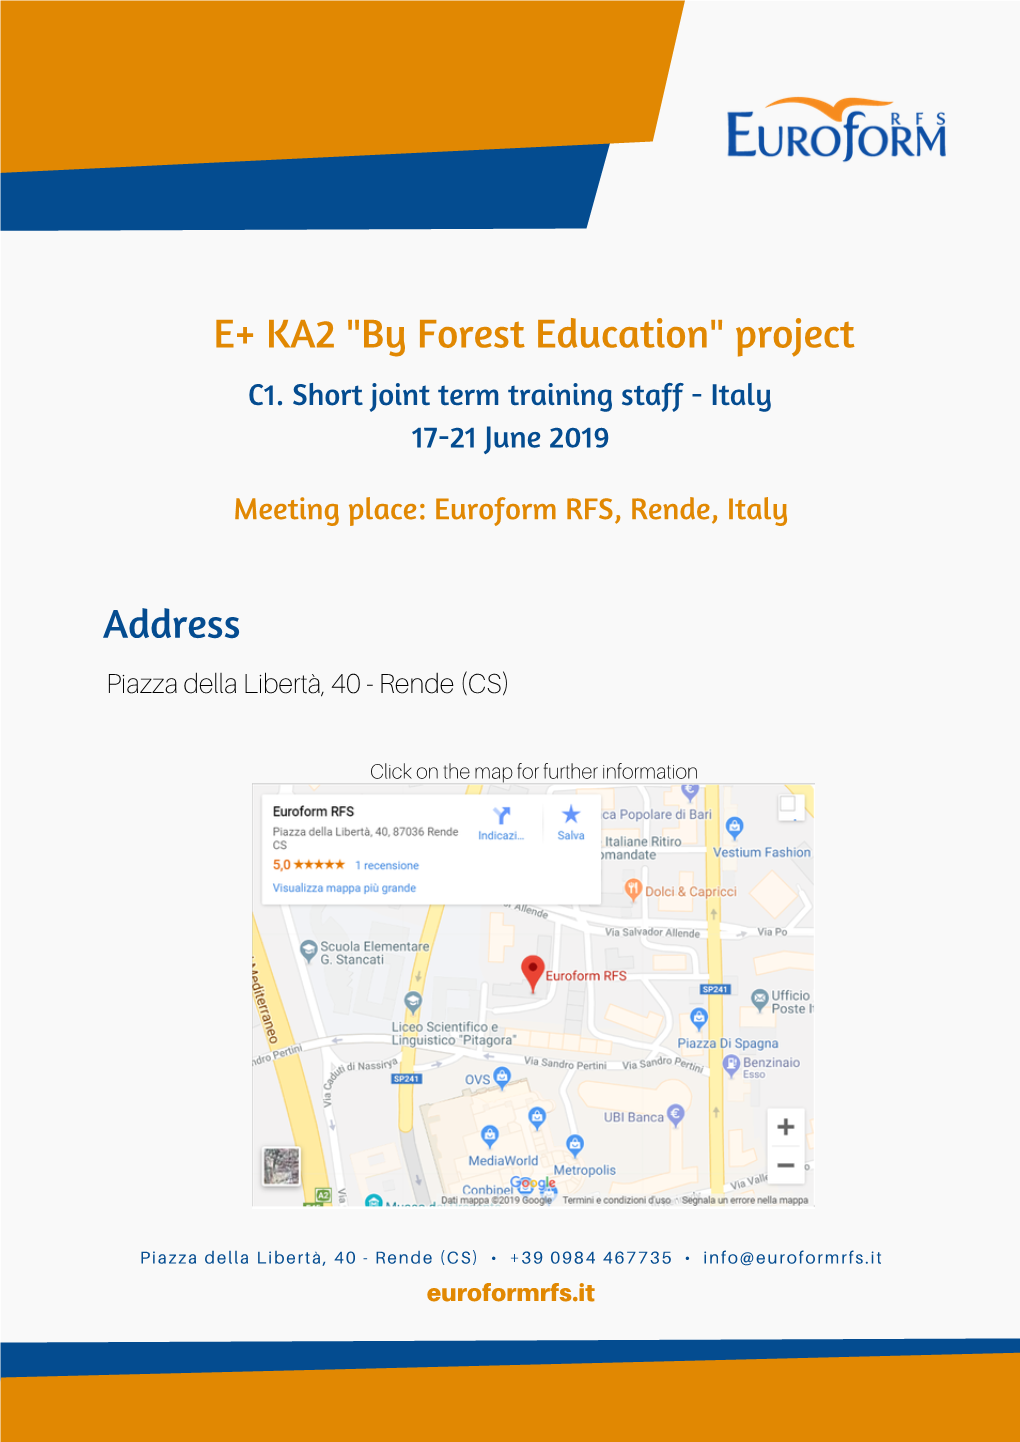 Address E+ KA2 "By Forest Education" Project